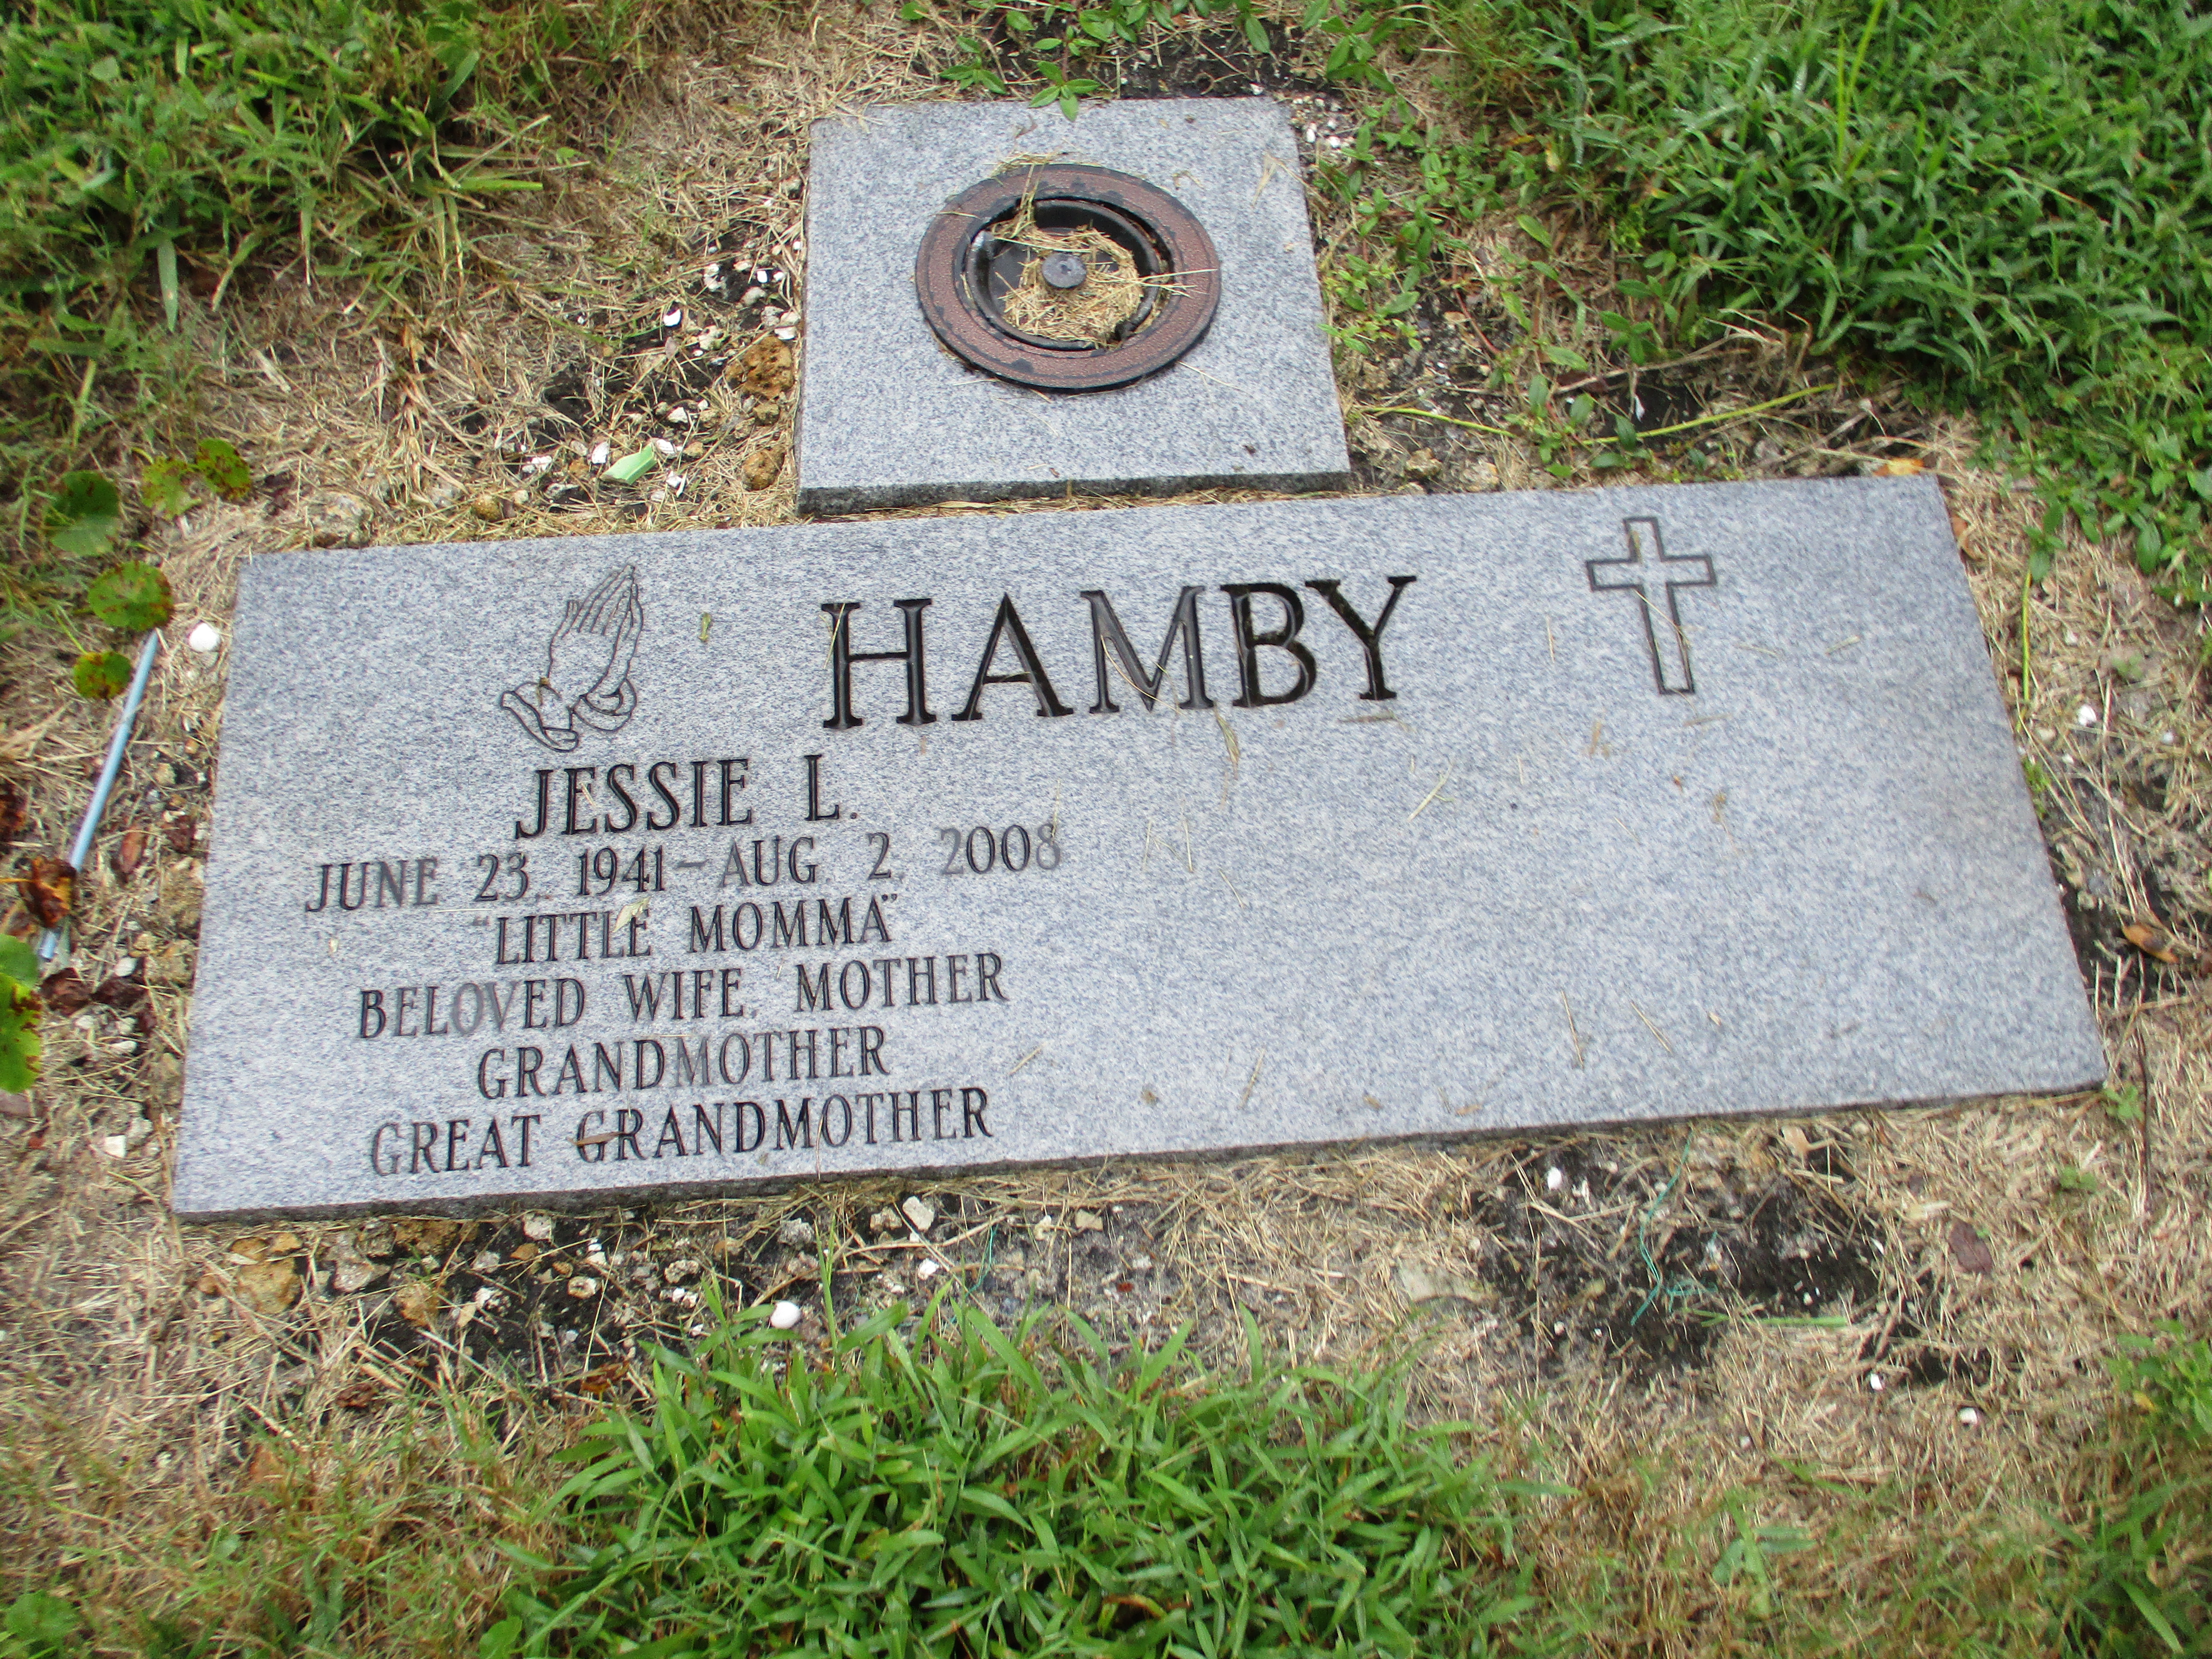 Jessie L "Little Momma" Hamby